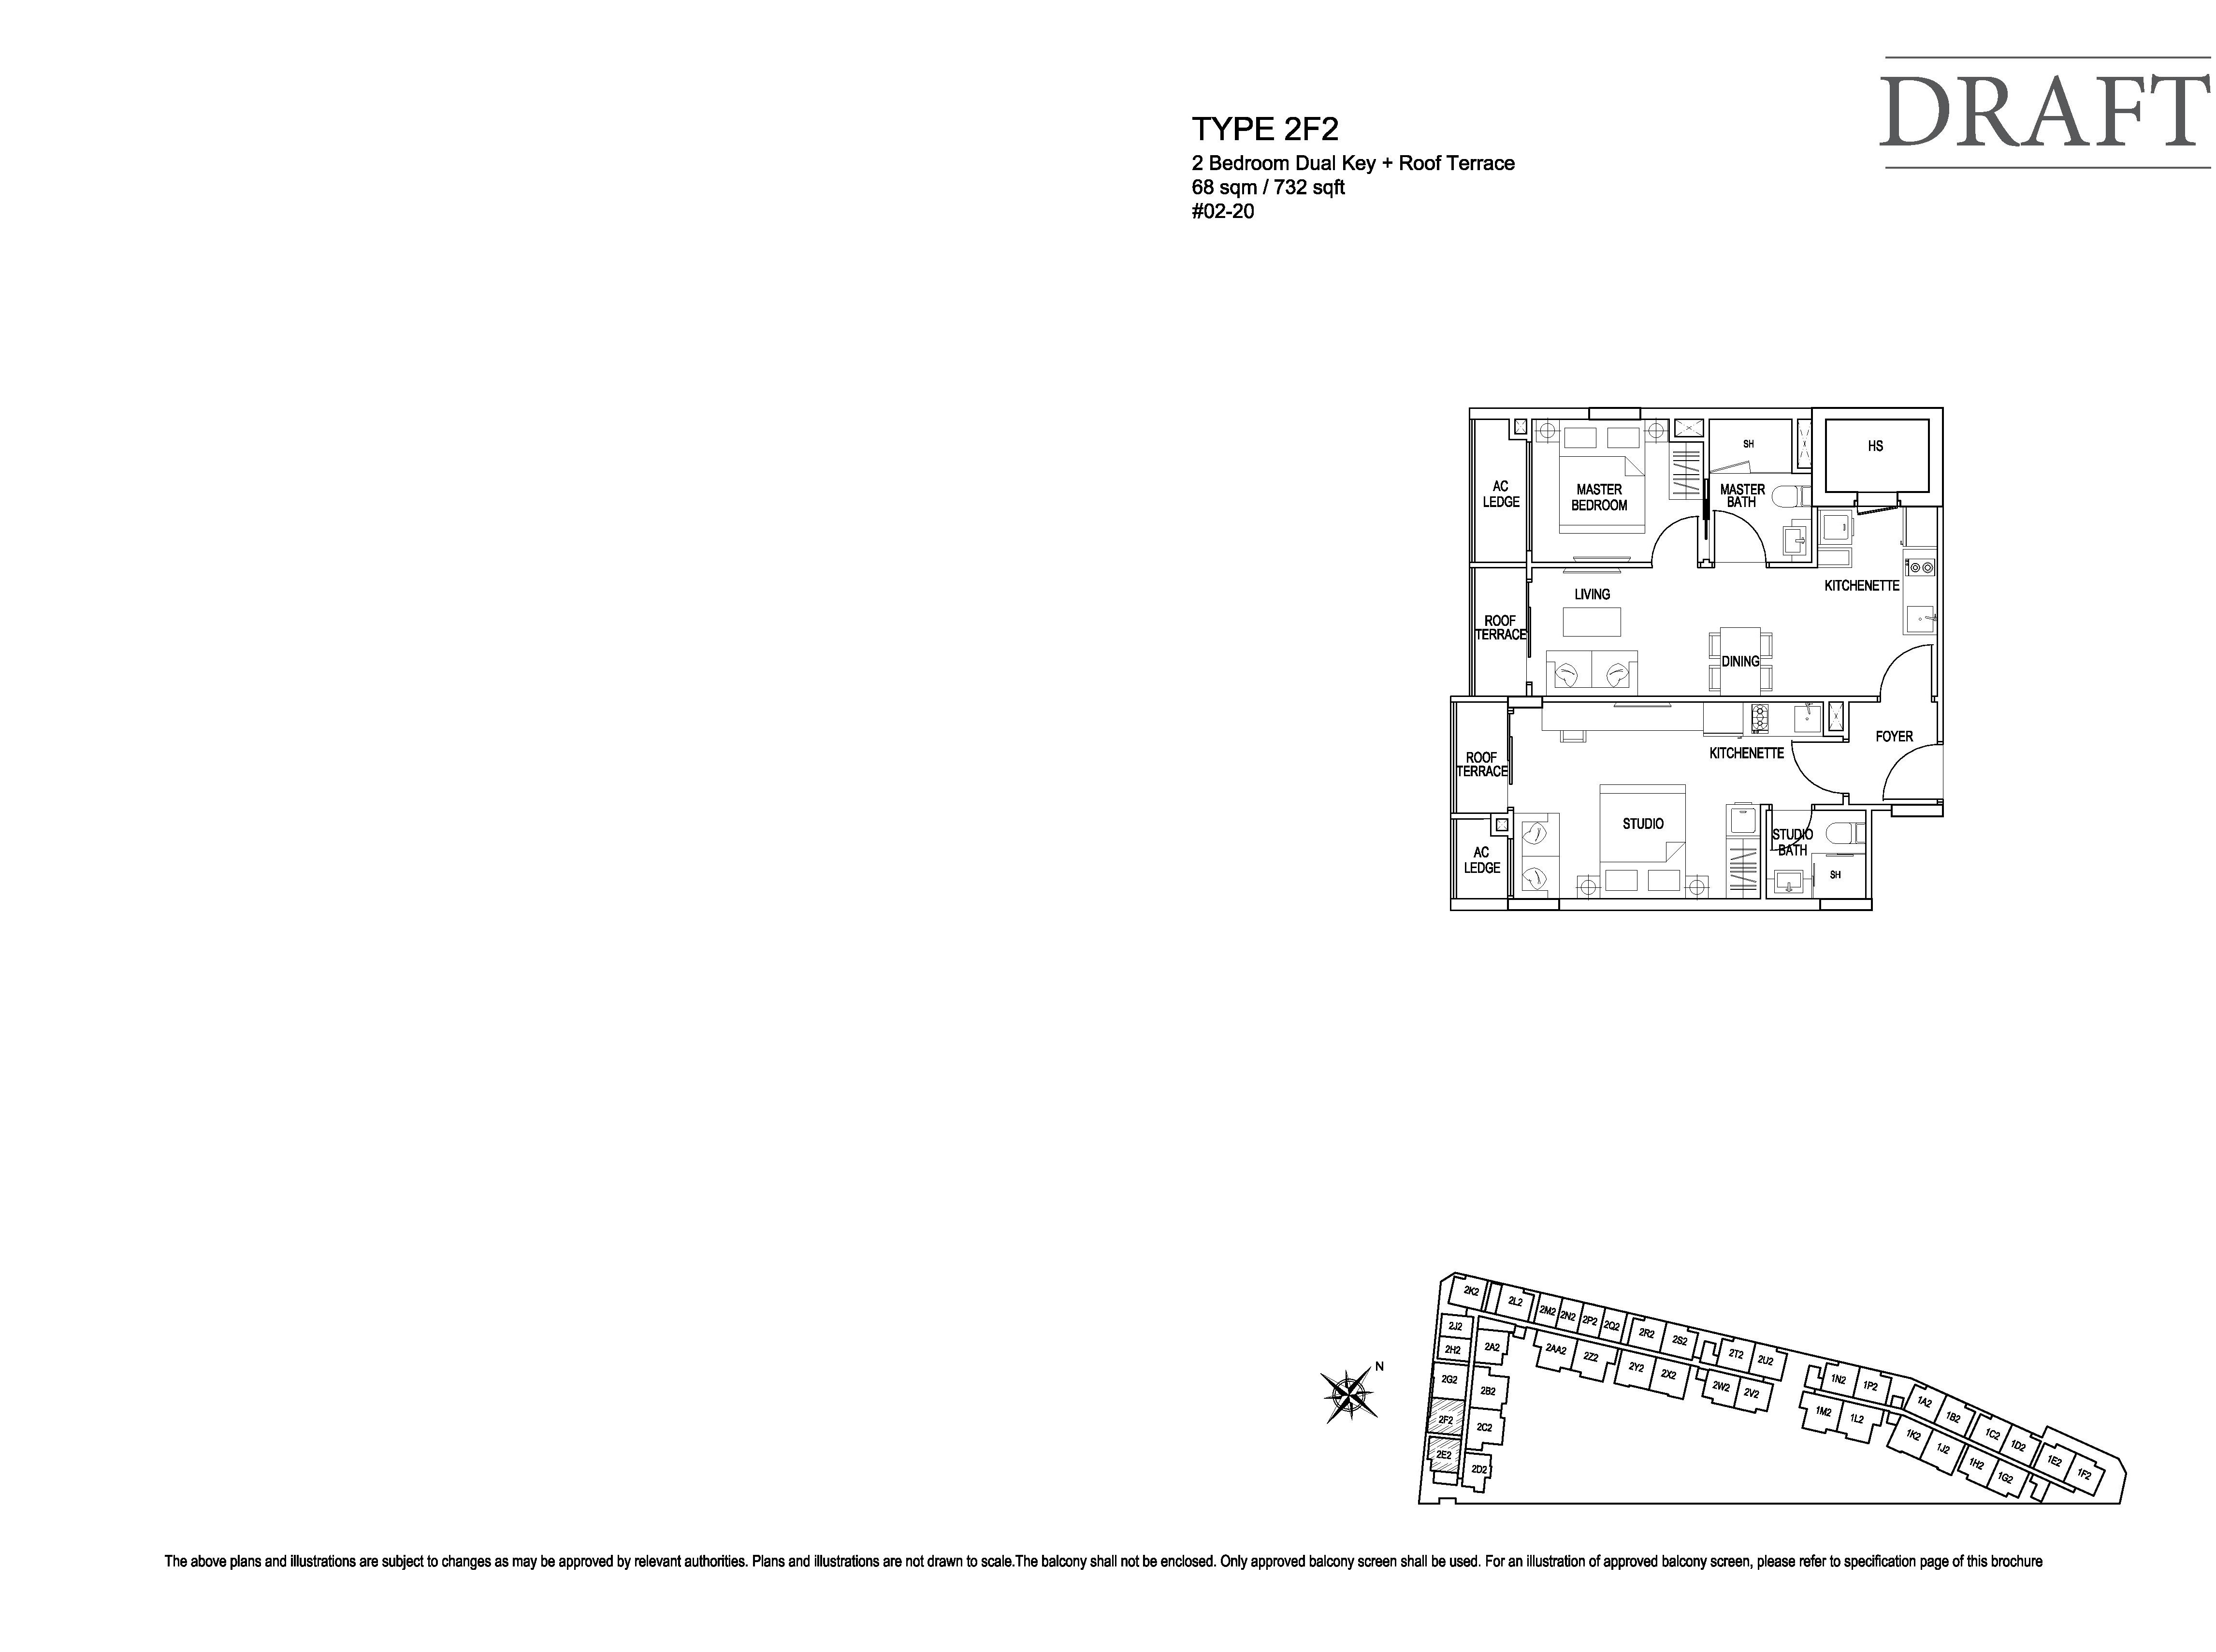 Kensington Square 2 Bedroom Dual Key Floor Plans Type 2F2